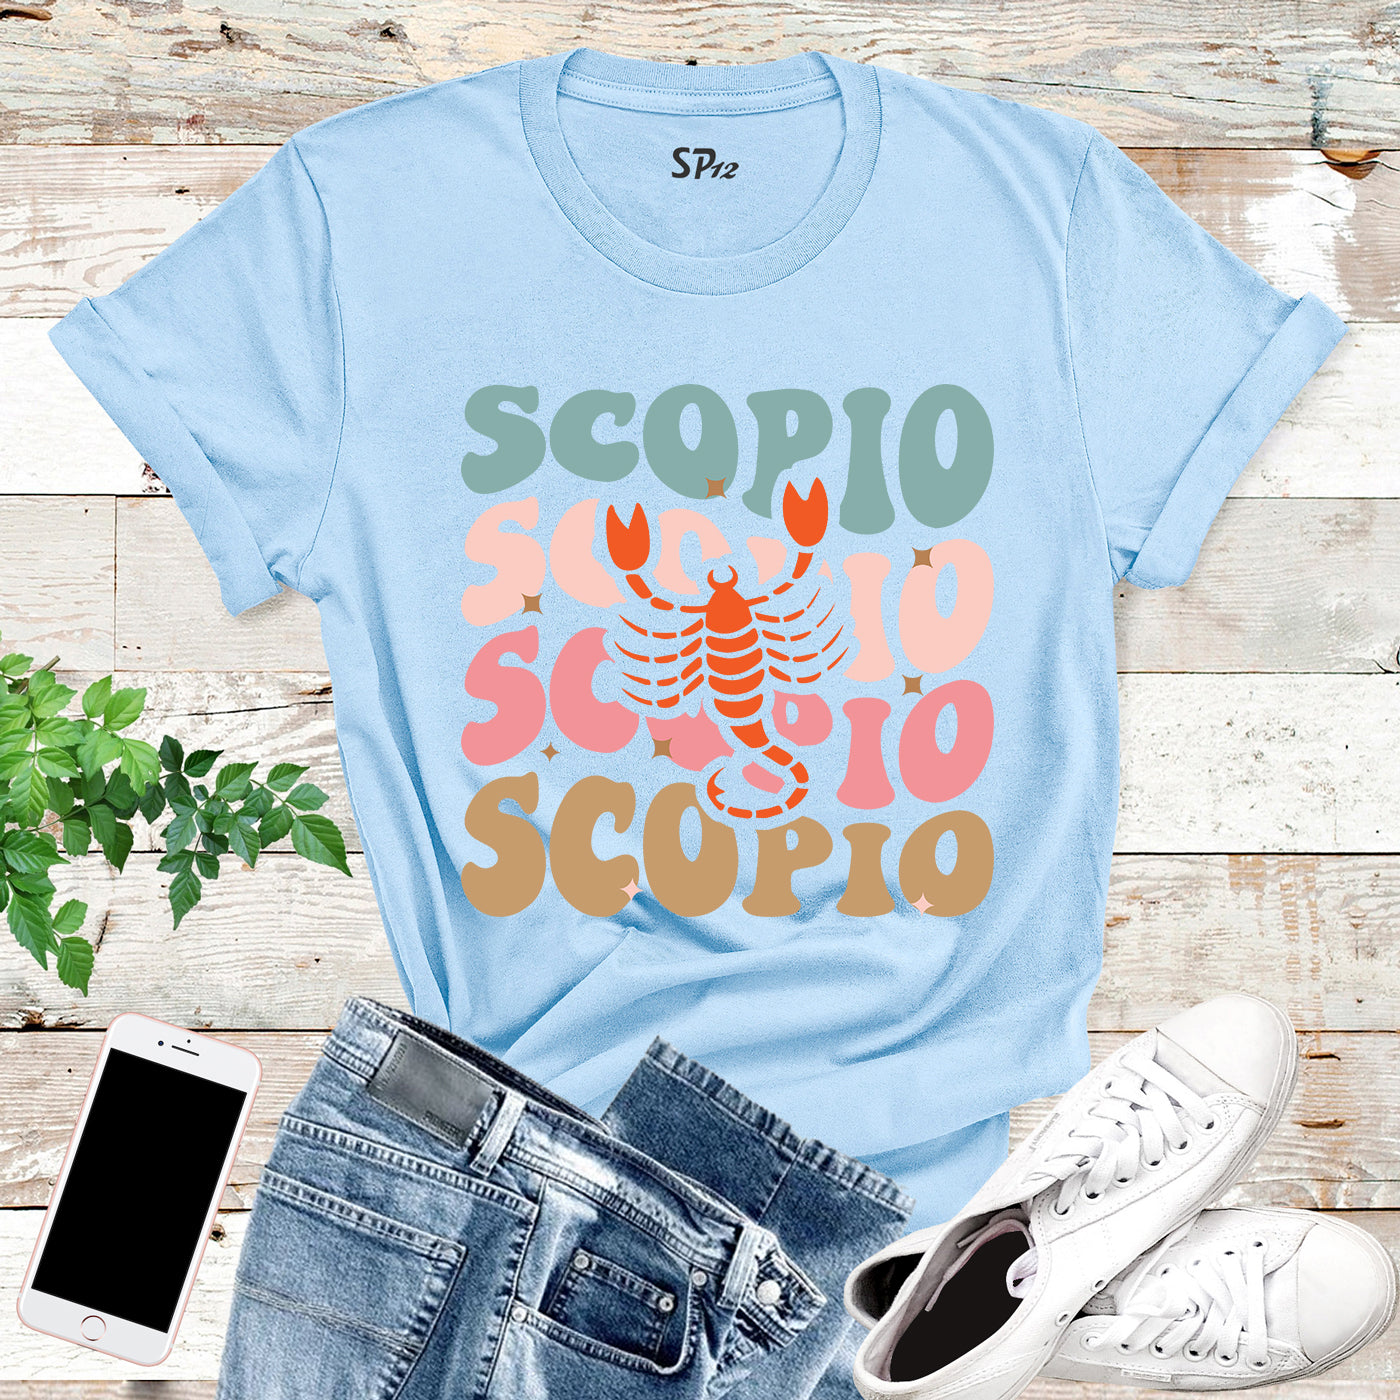 Scorpio Funny T Shirt